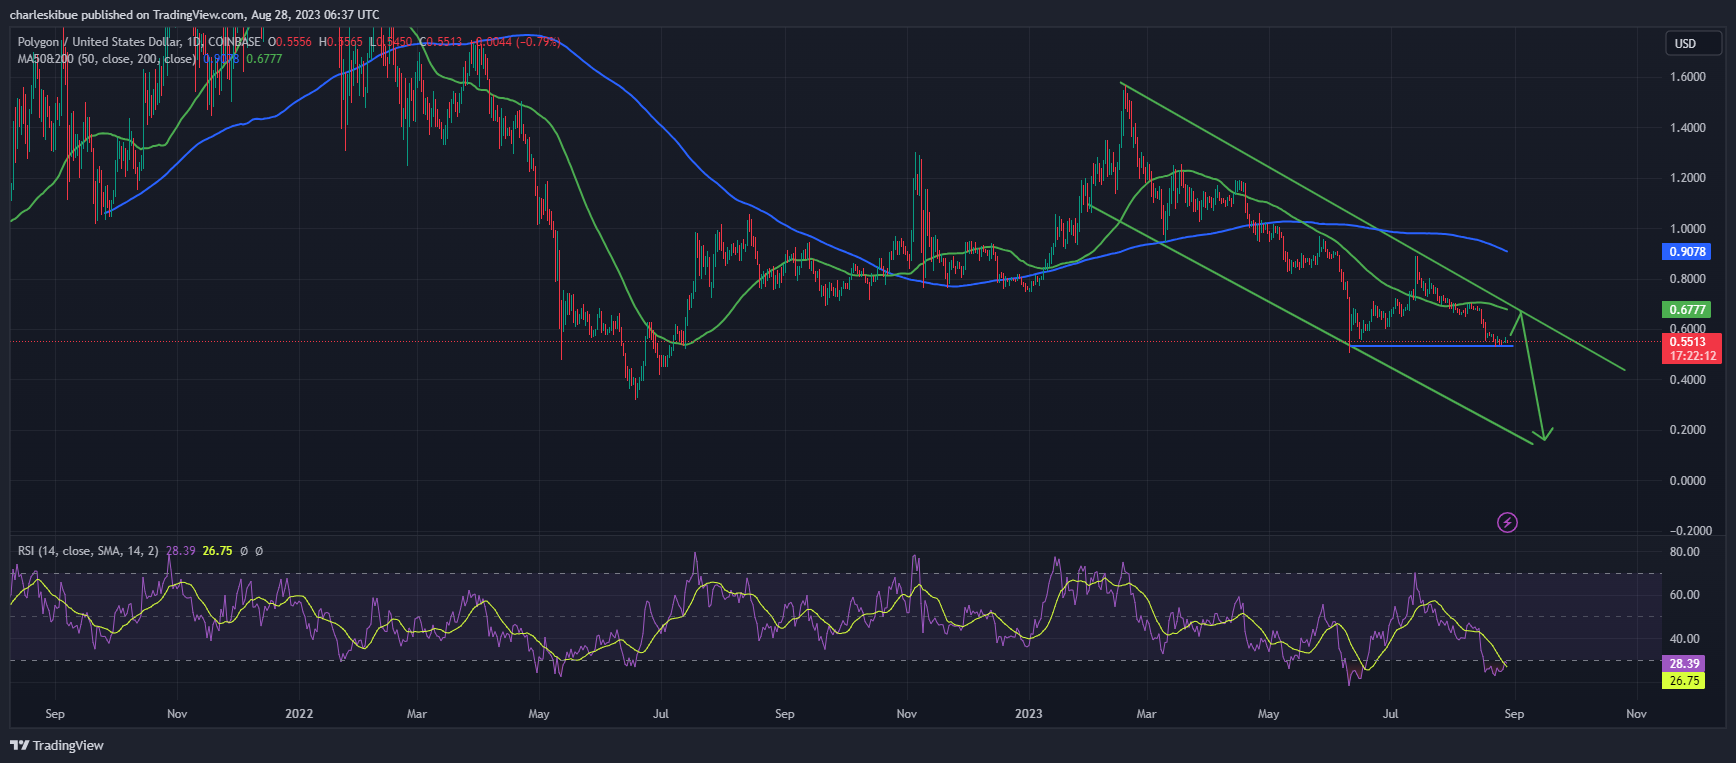 MATIC/USD Chart Analysis. Source Tradingview.com